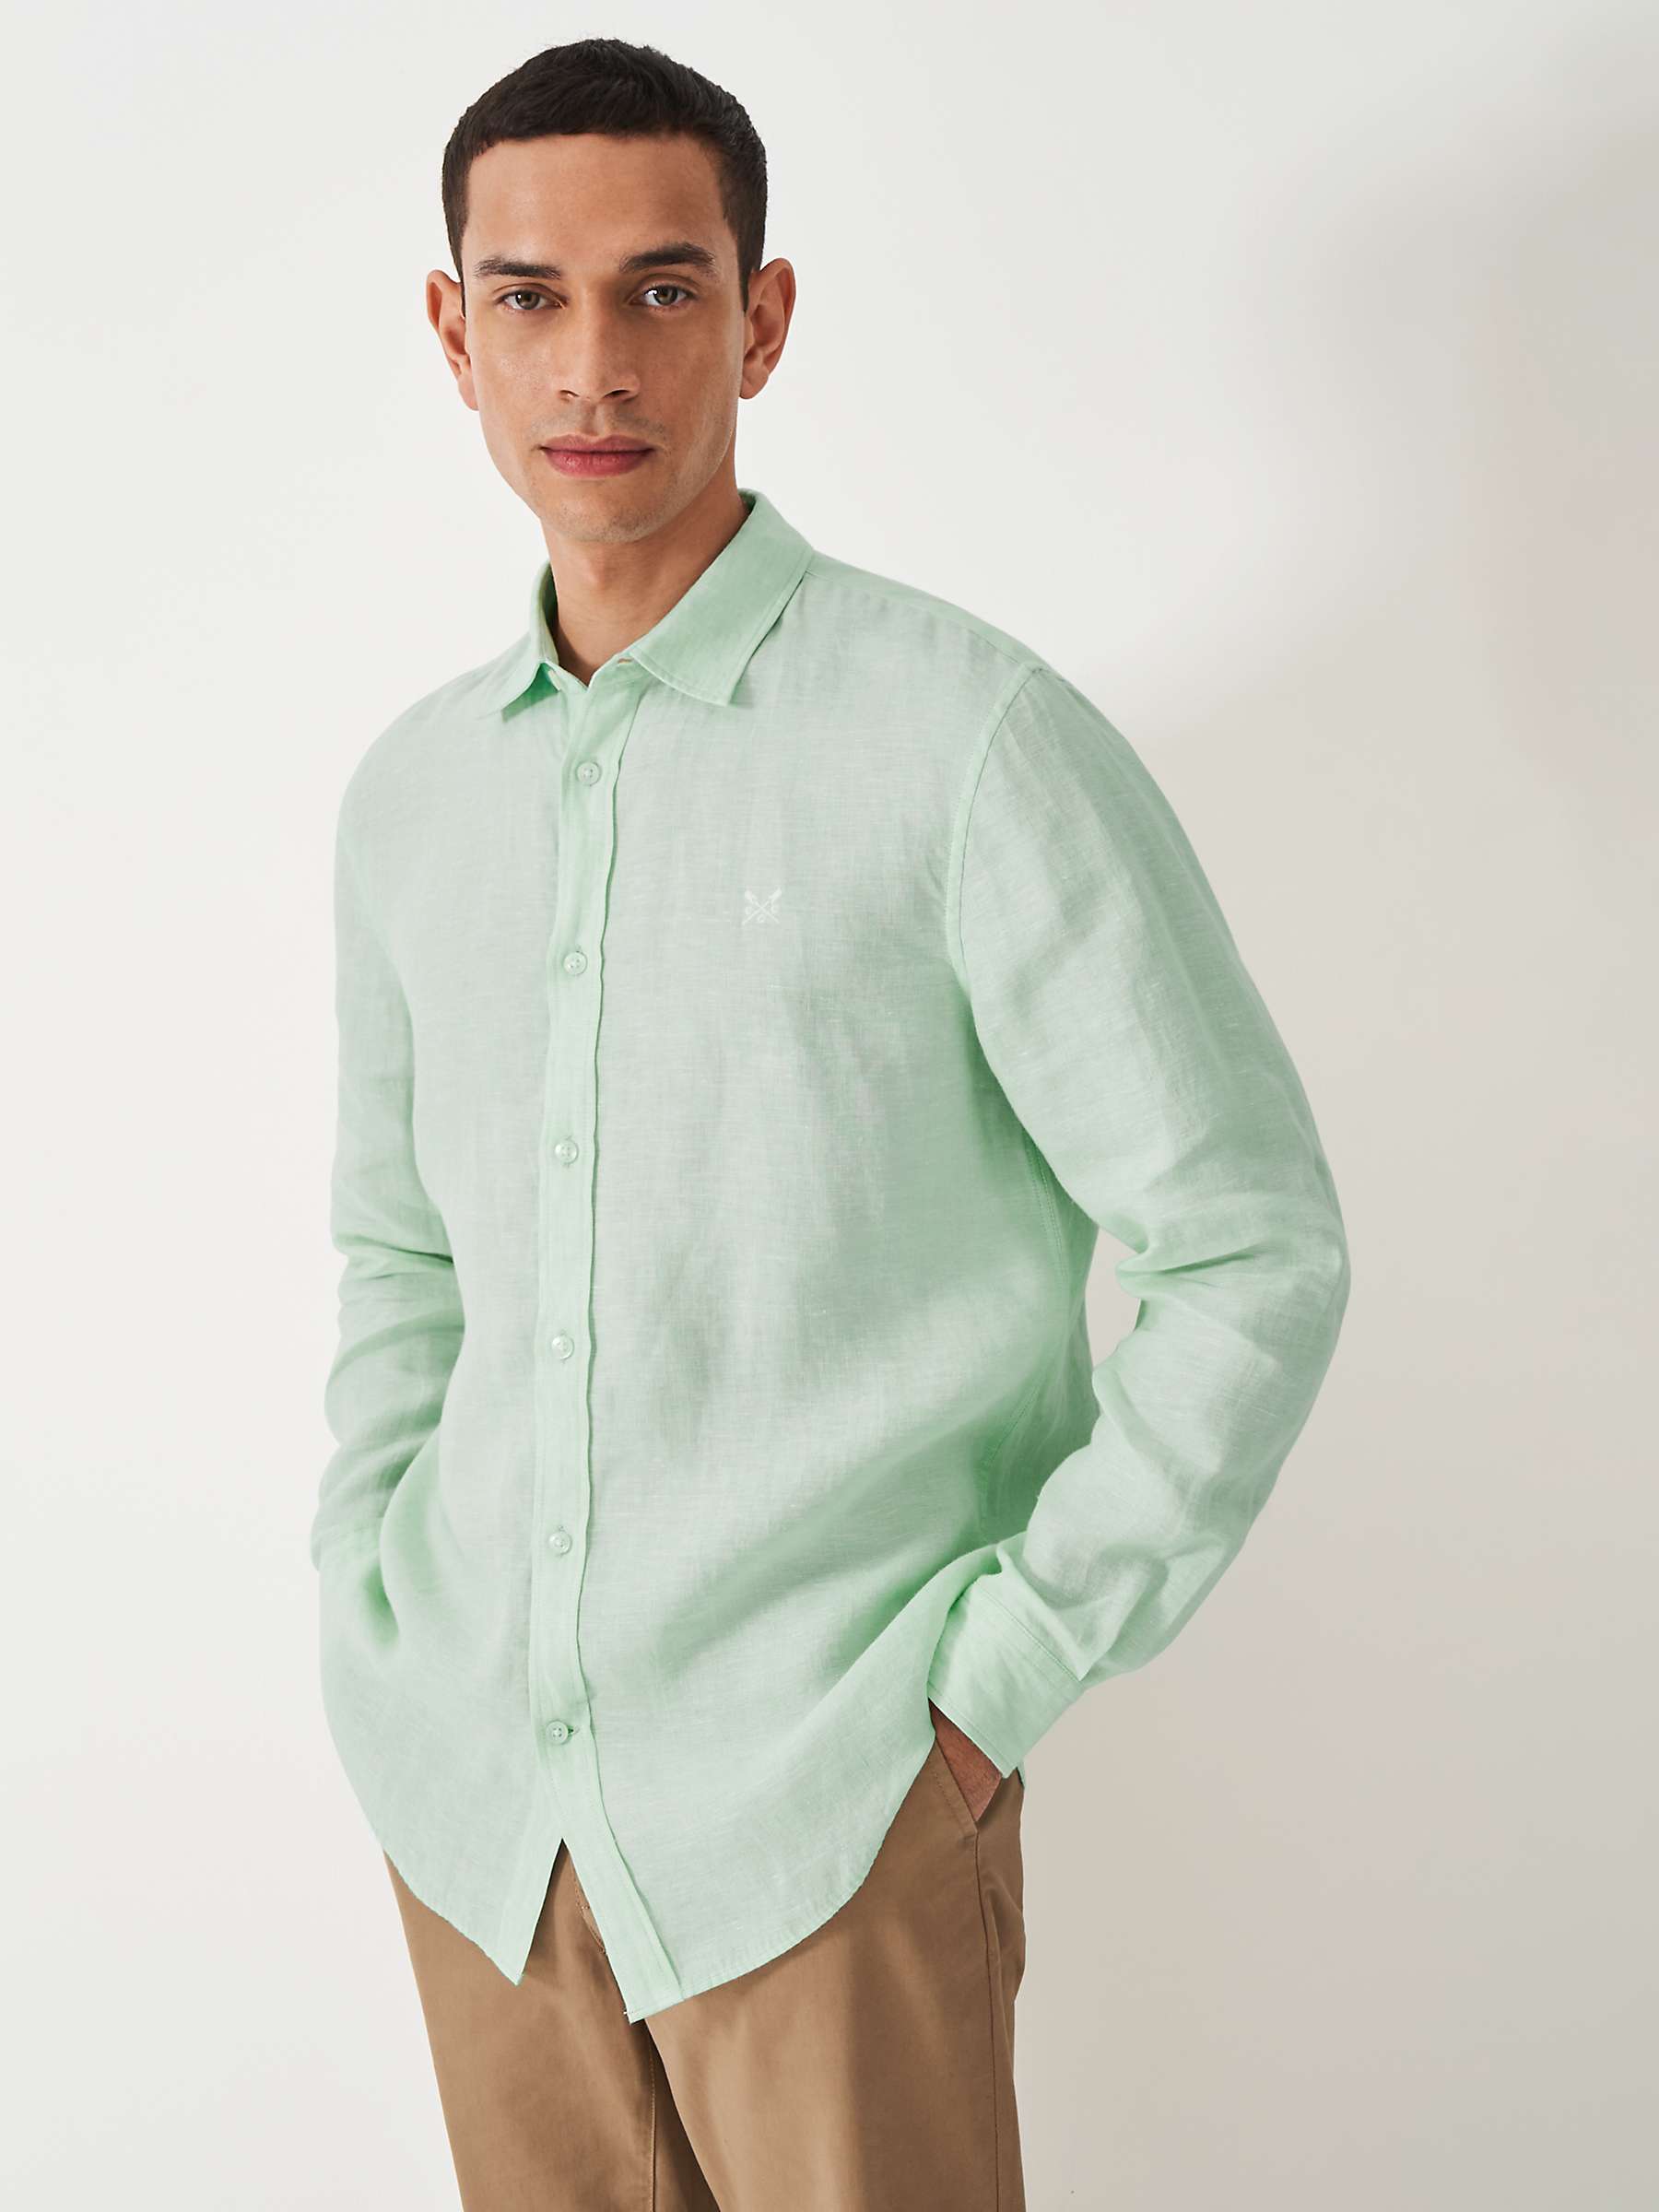 Crew Clothing Linen Long Sleeve Shirt, Mint Green at John Lewis & Partners